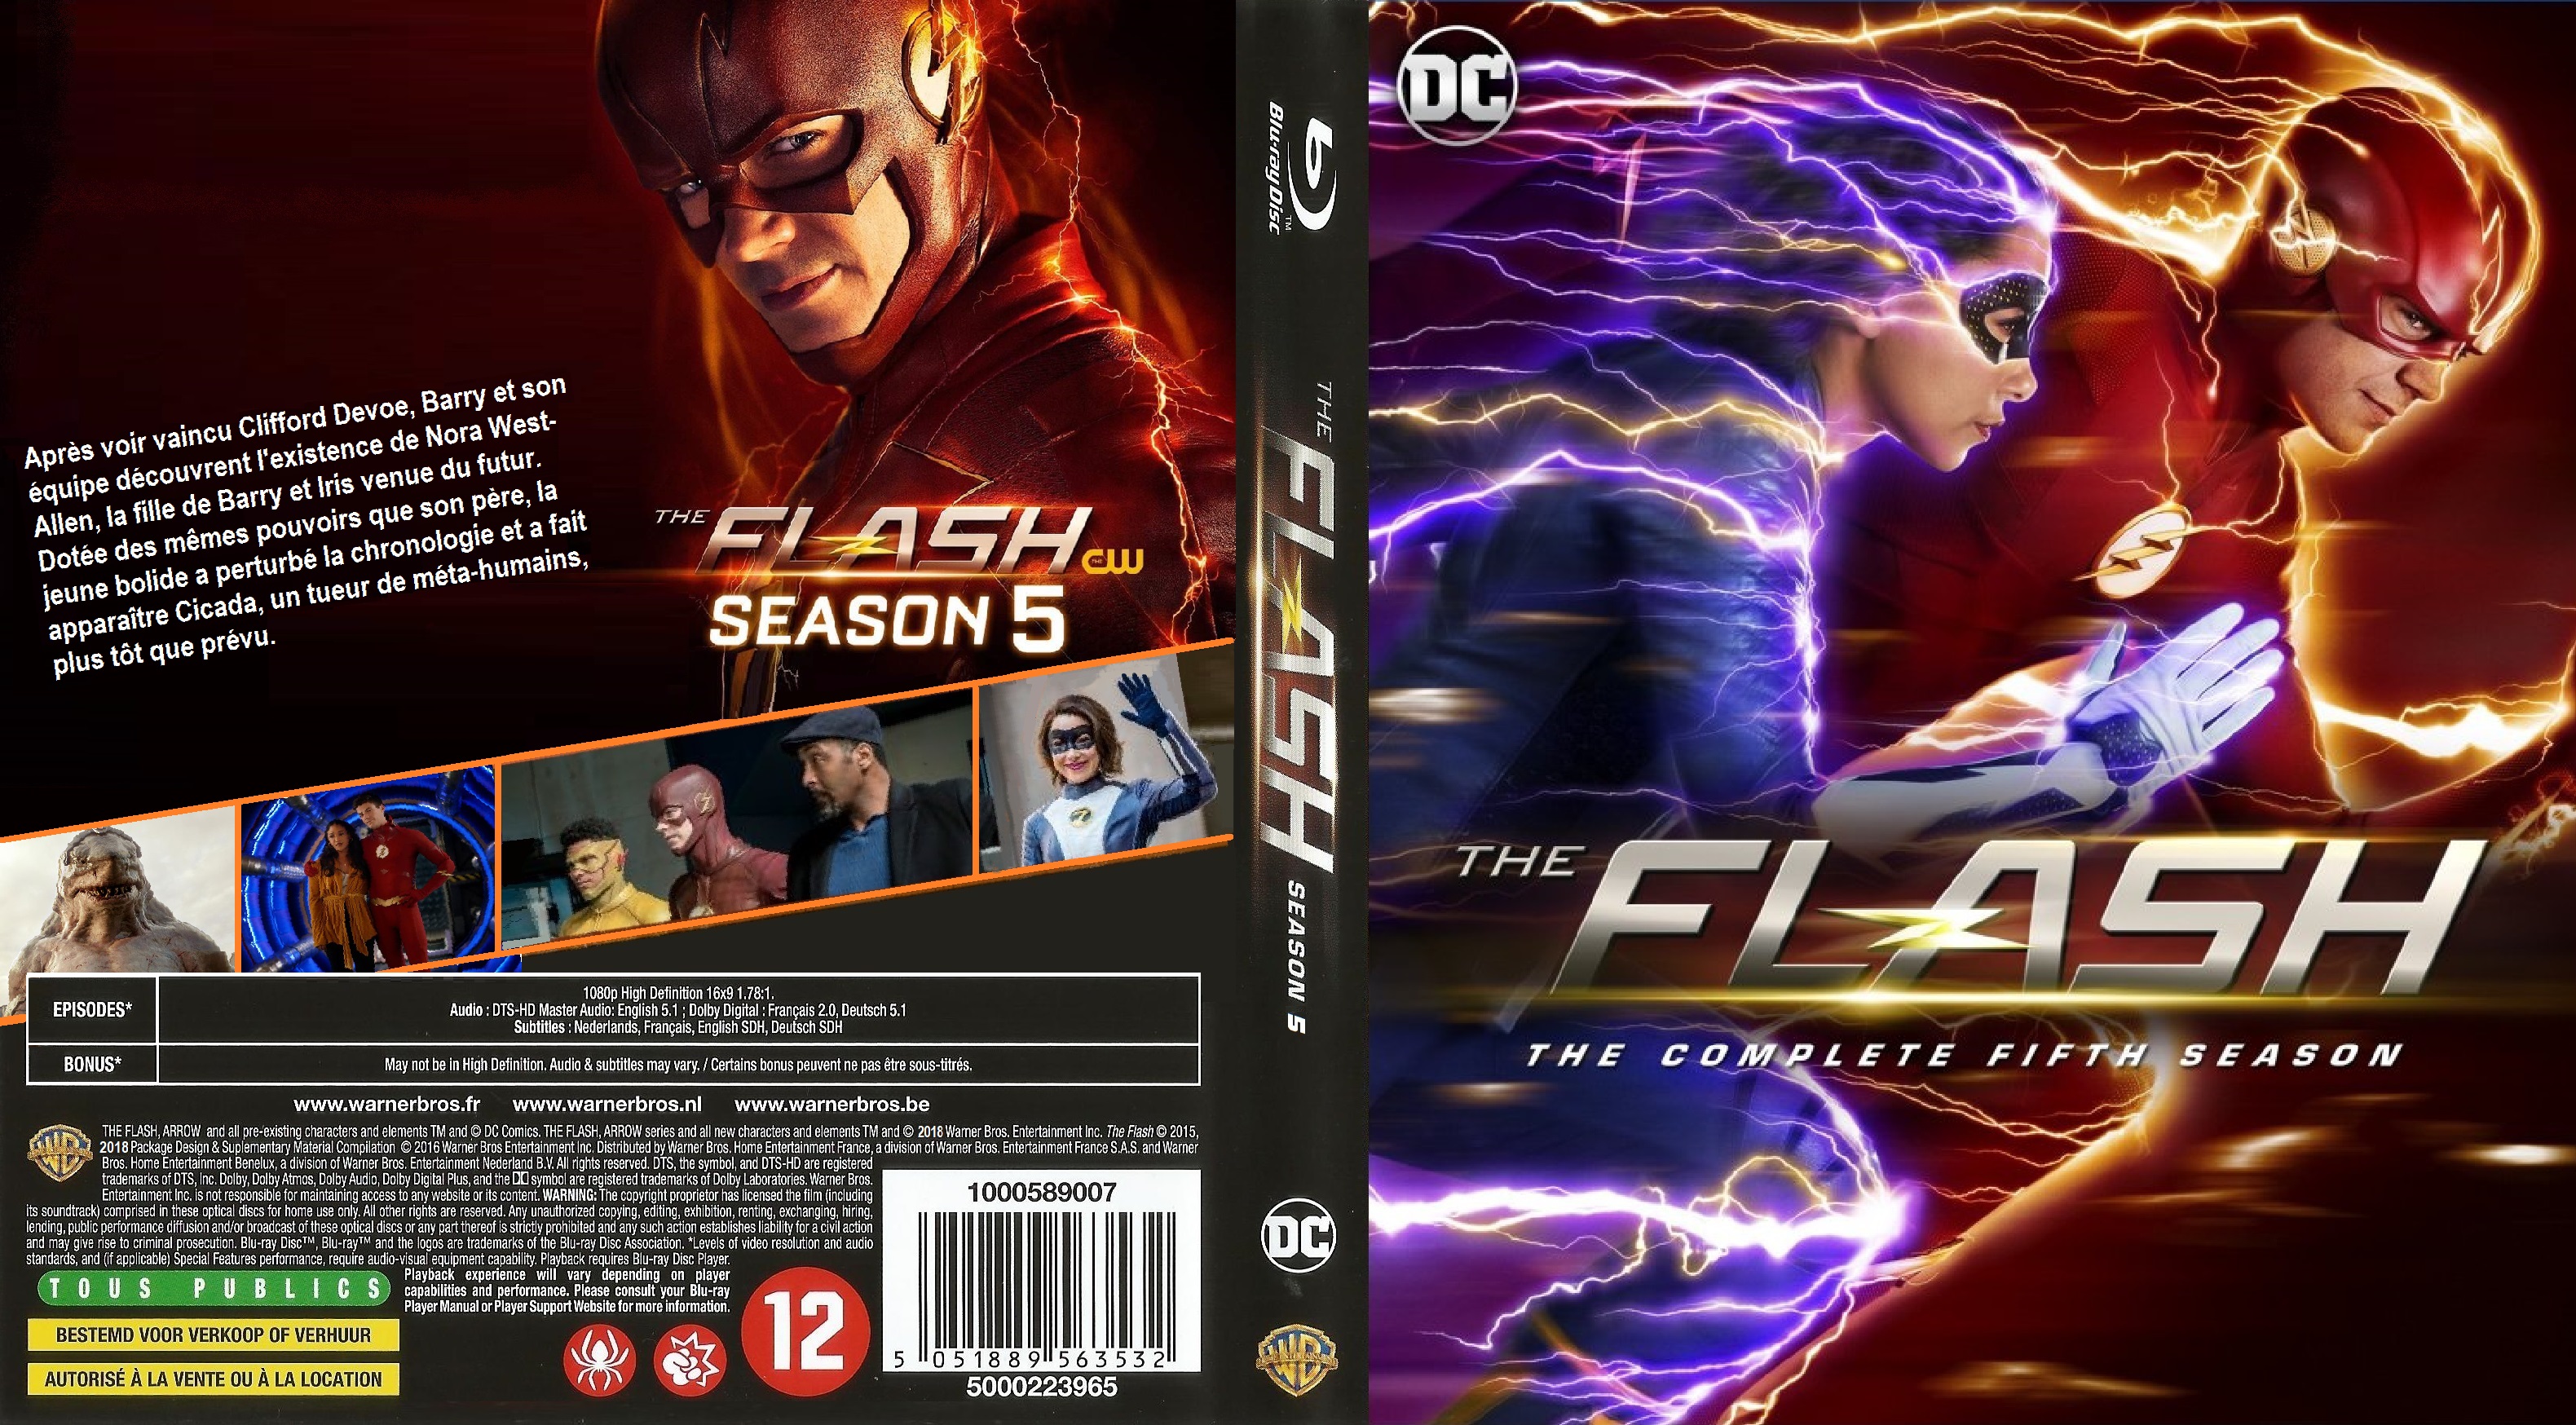 Jaquette DVD Flash saison 5 custom (BLU-RAY)